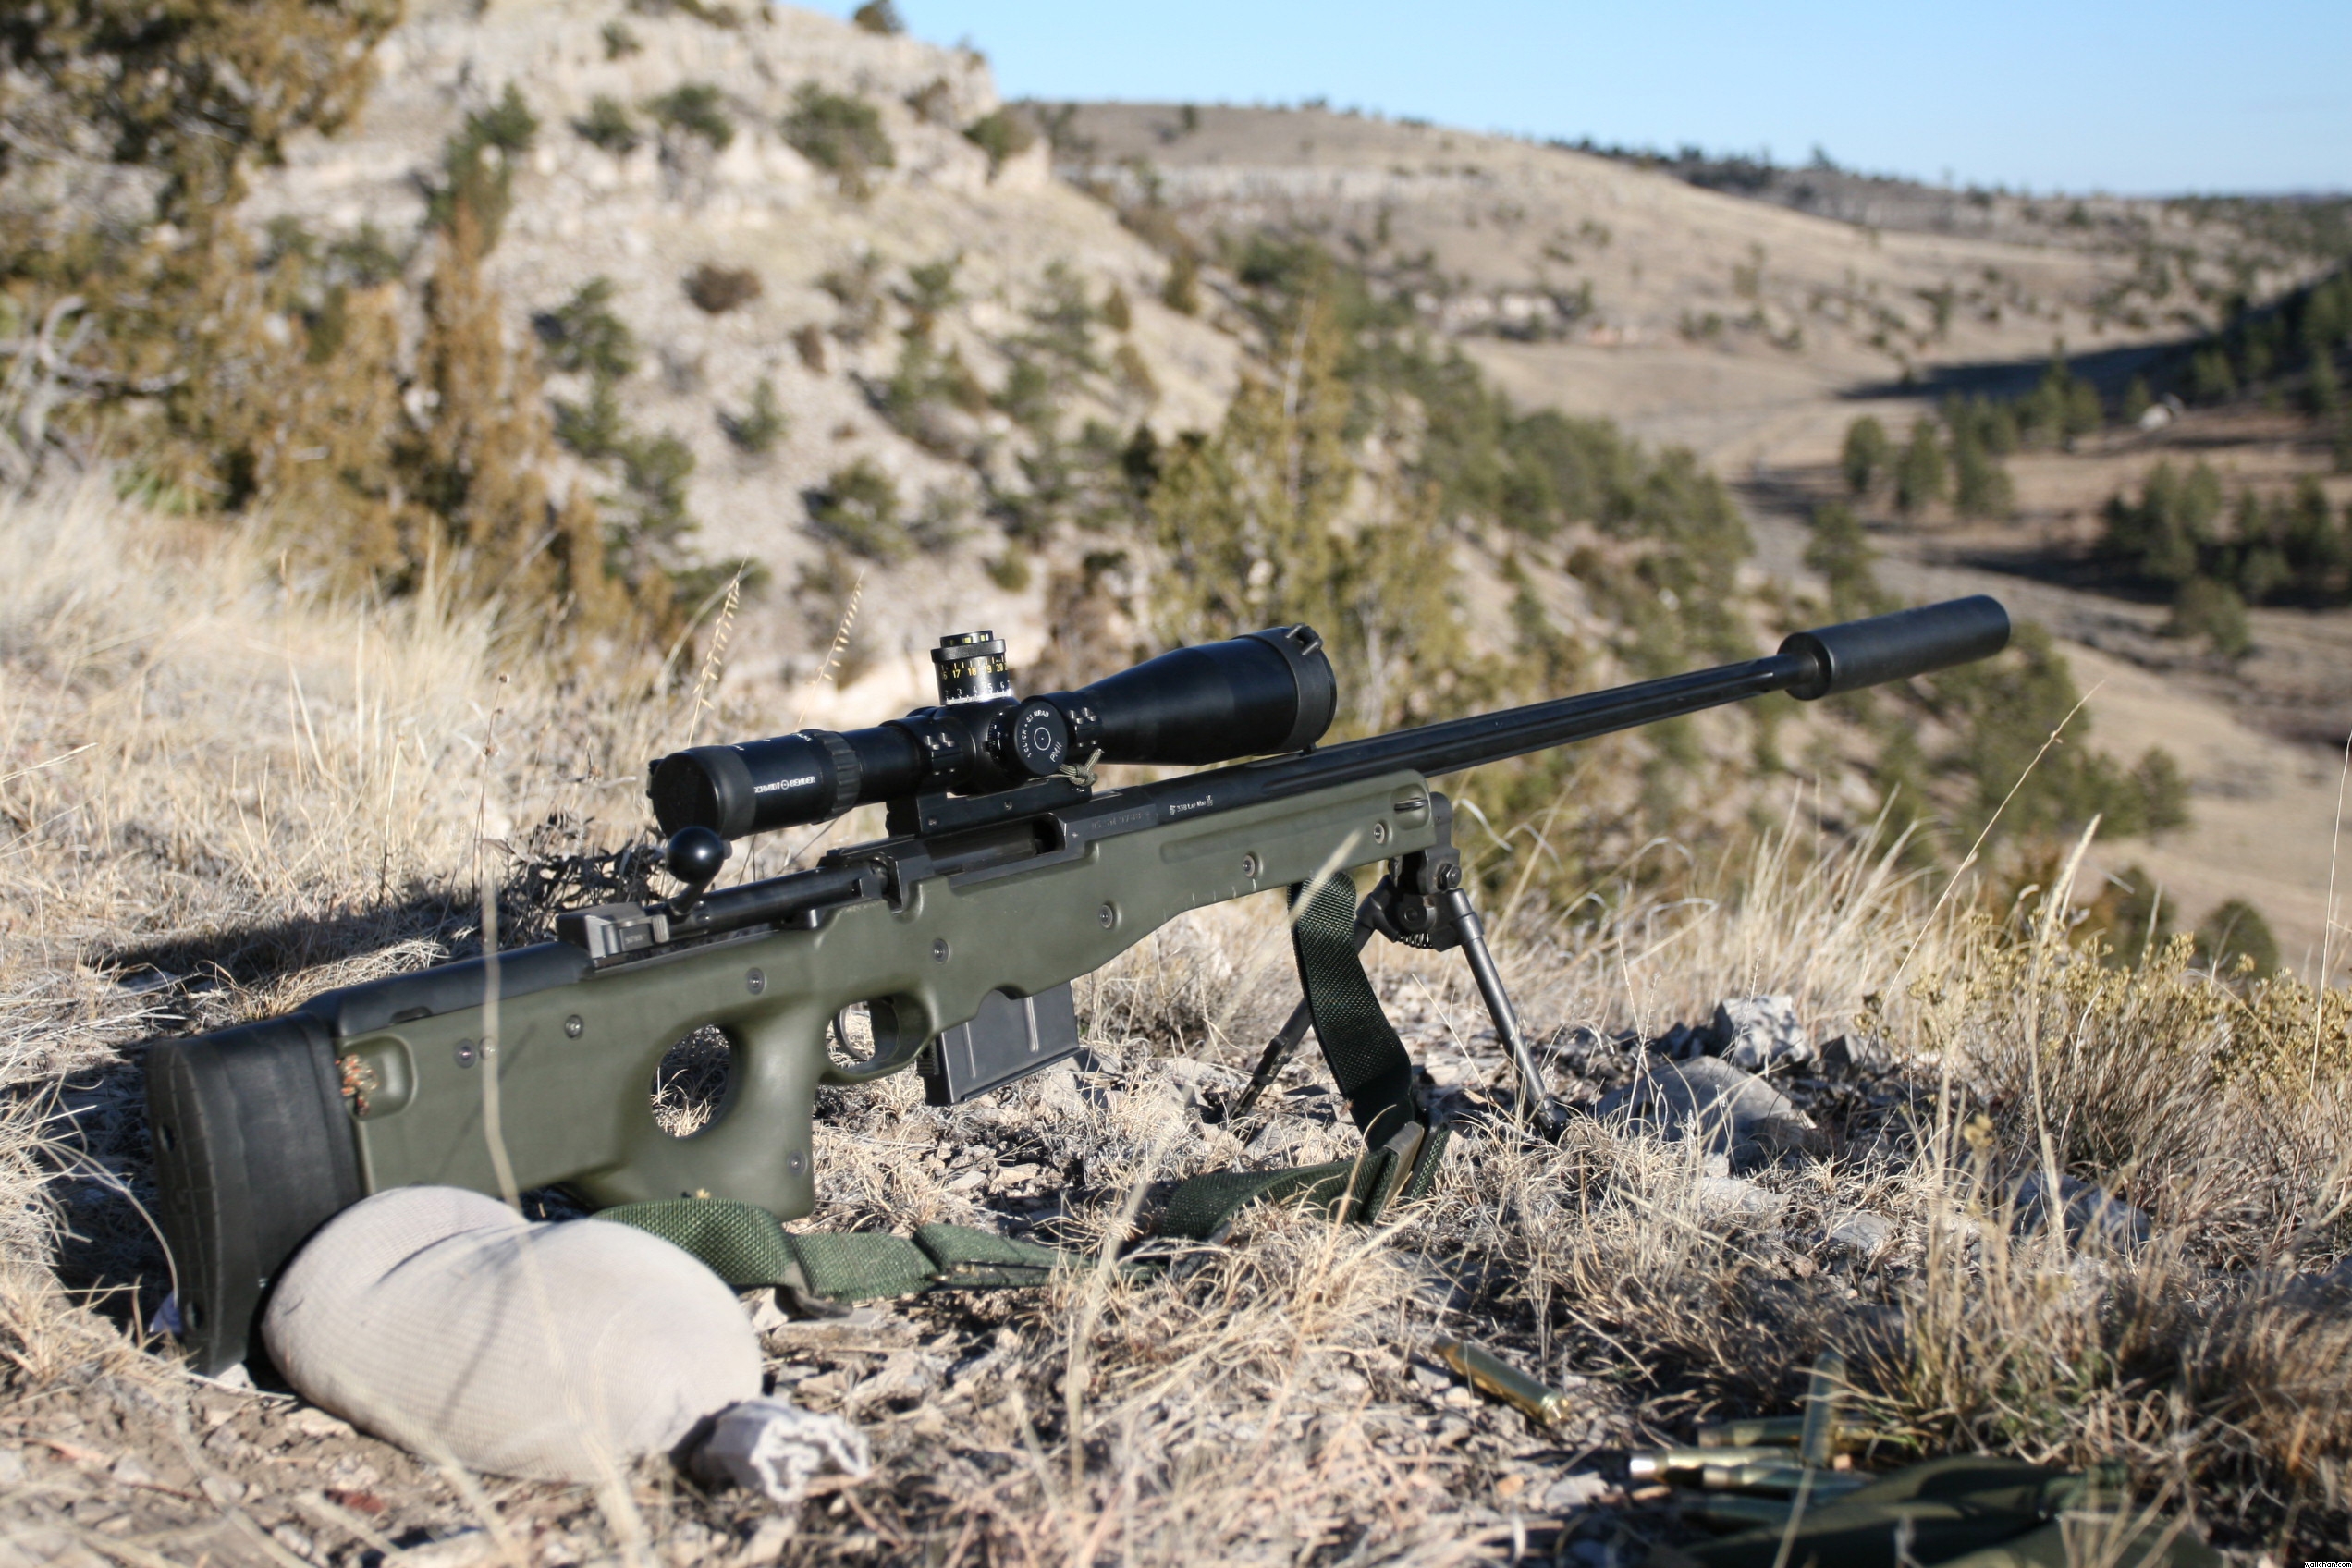 Savage Lapua Magnum Sniper Rifle Full HD Wallpaper and Background Image